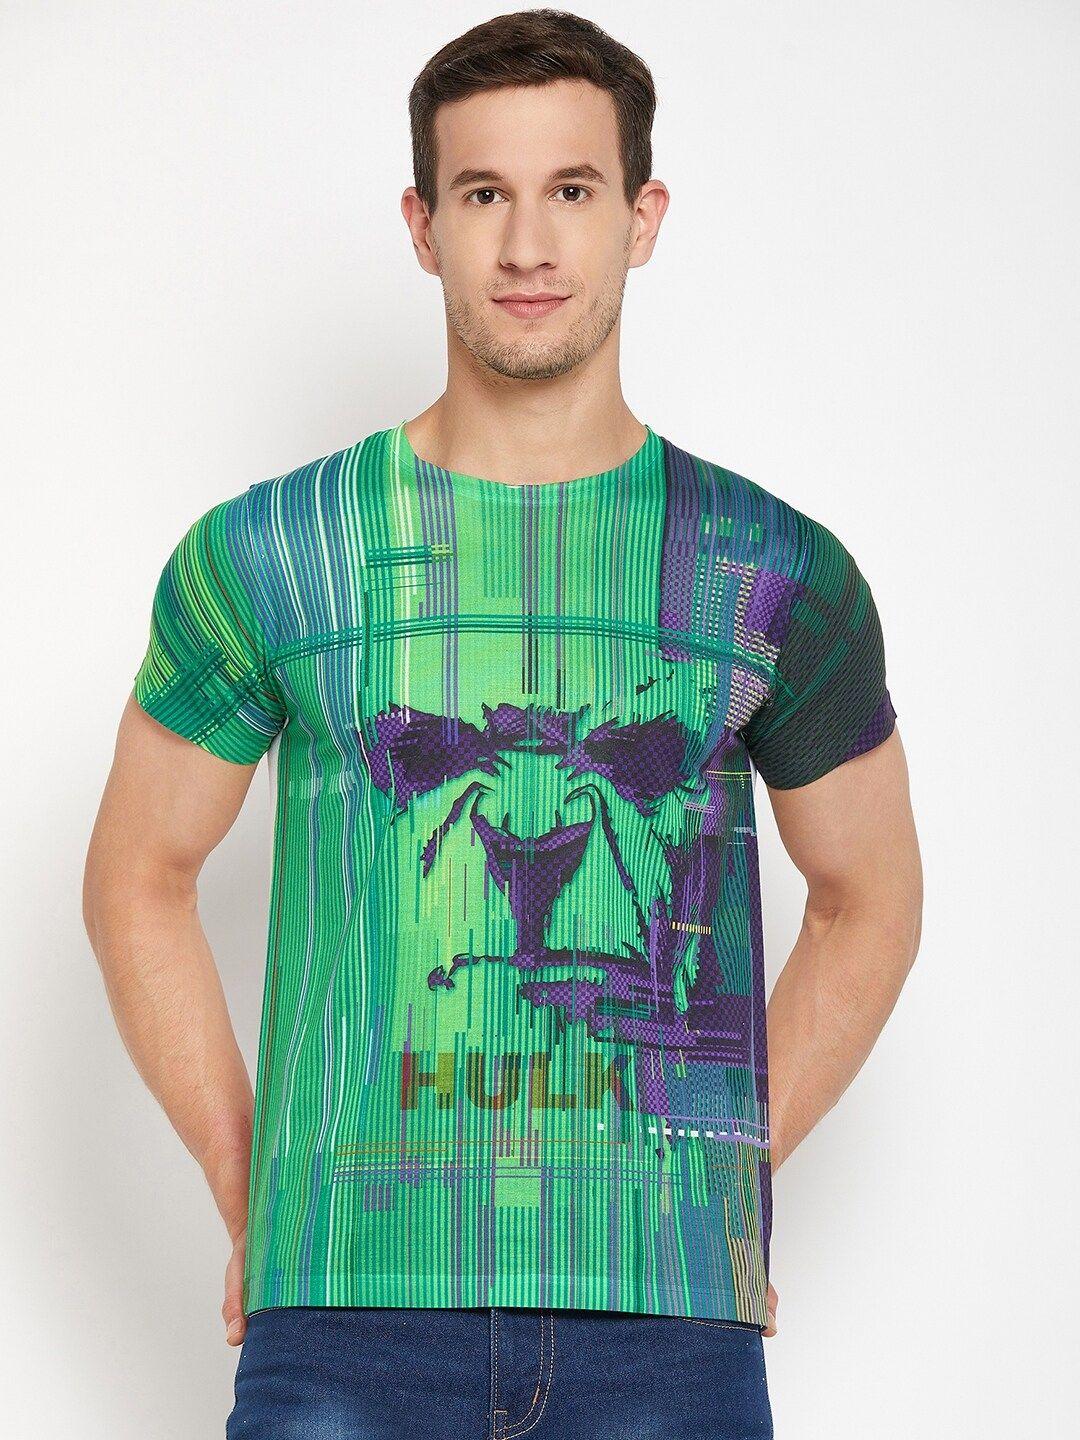 wear your mind hulk printed t-shirt